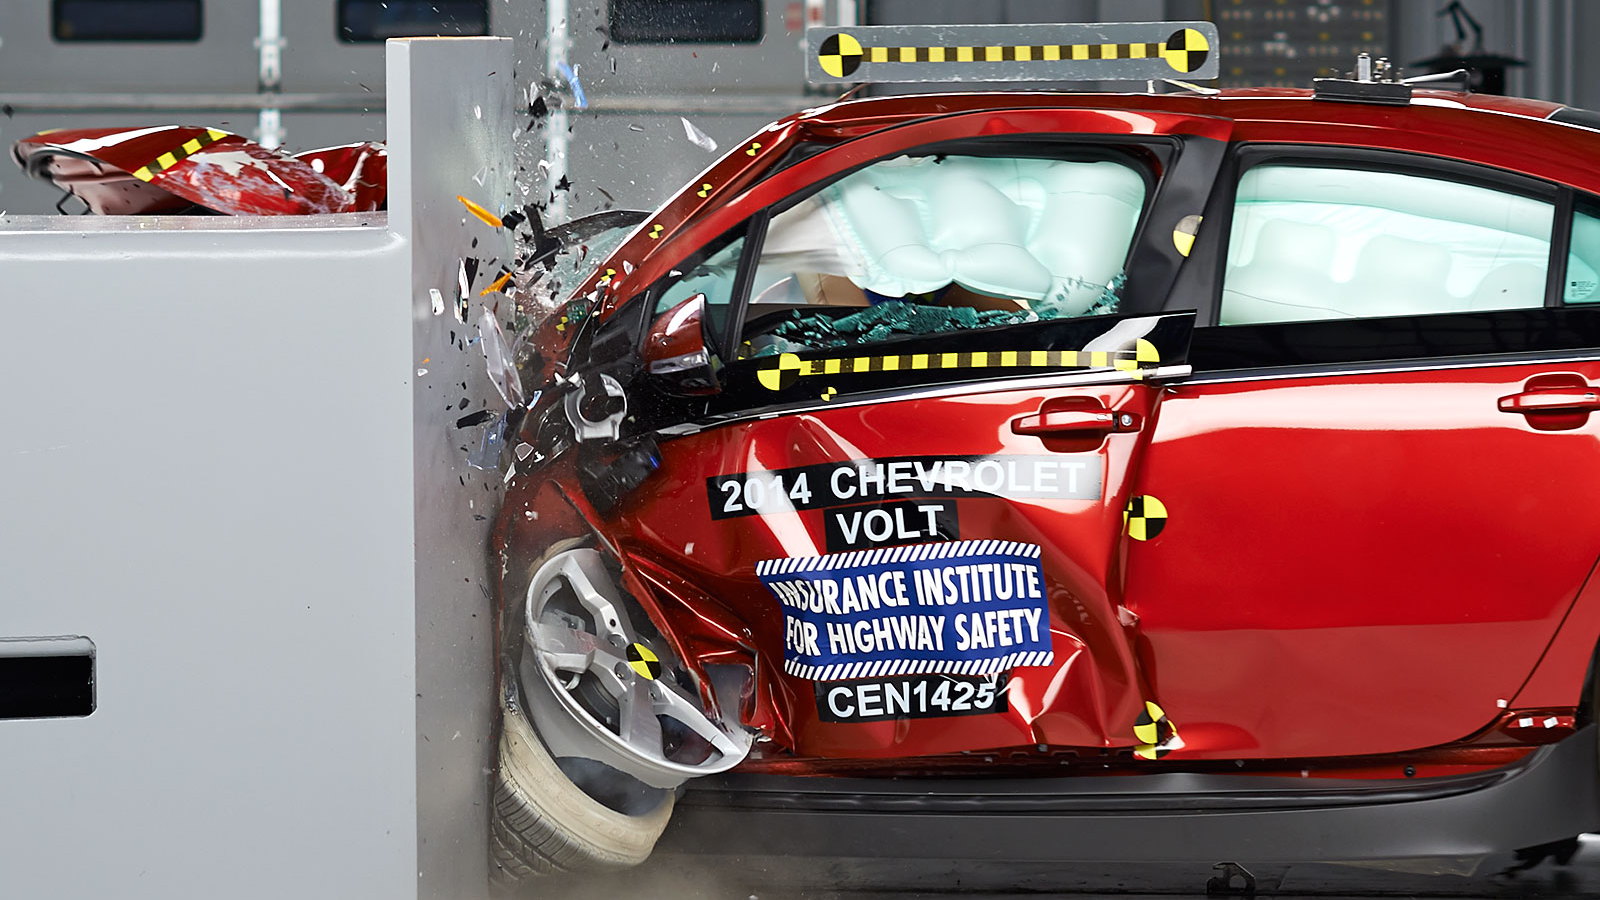 2014 Chevrolet Volt - IIHS small front overlap crash test